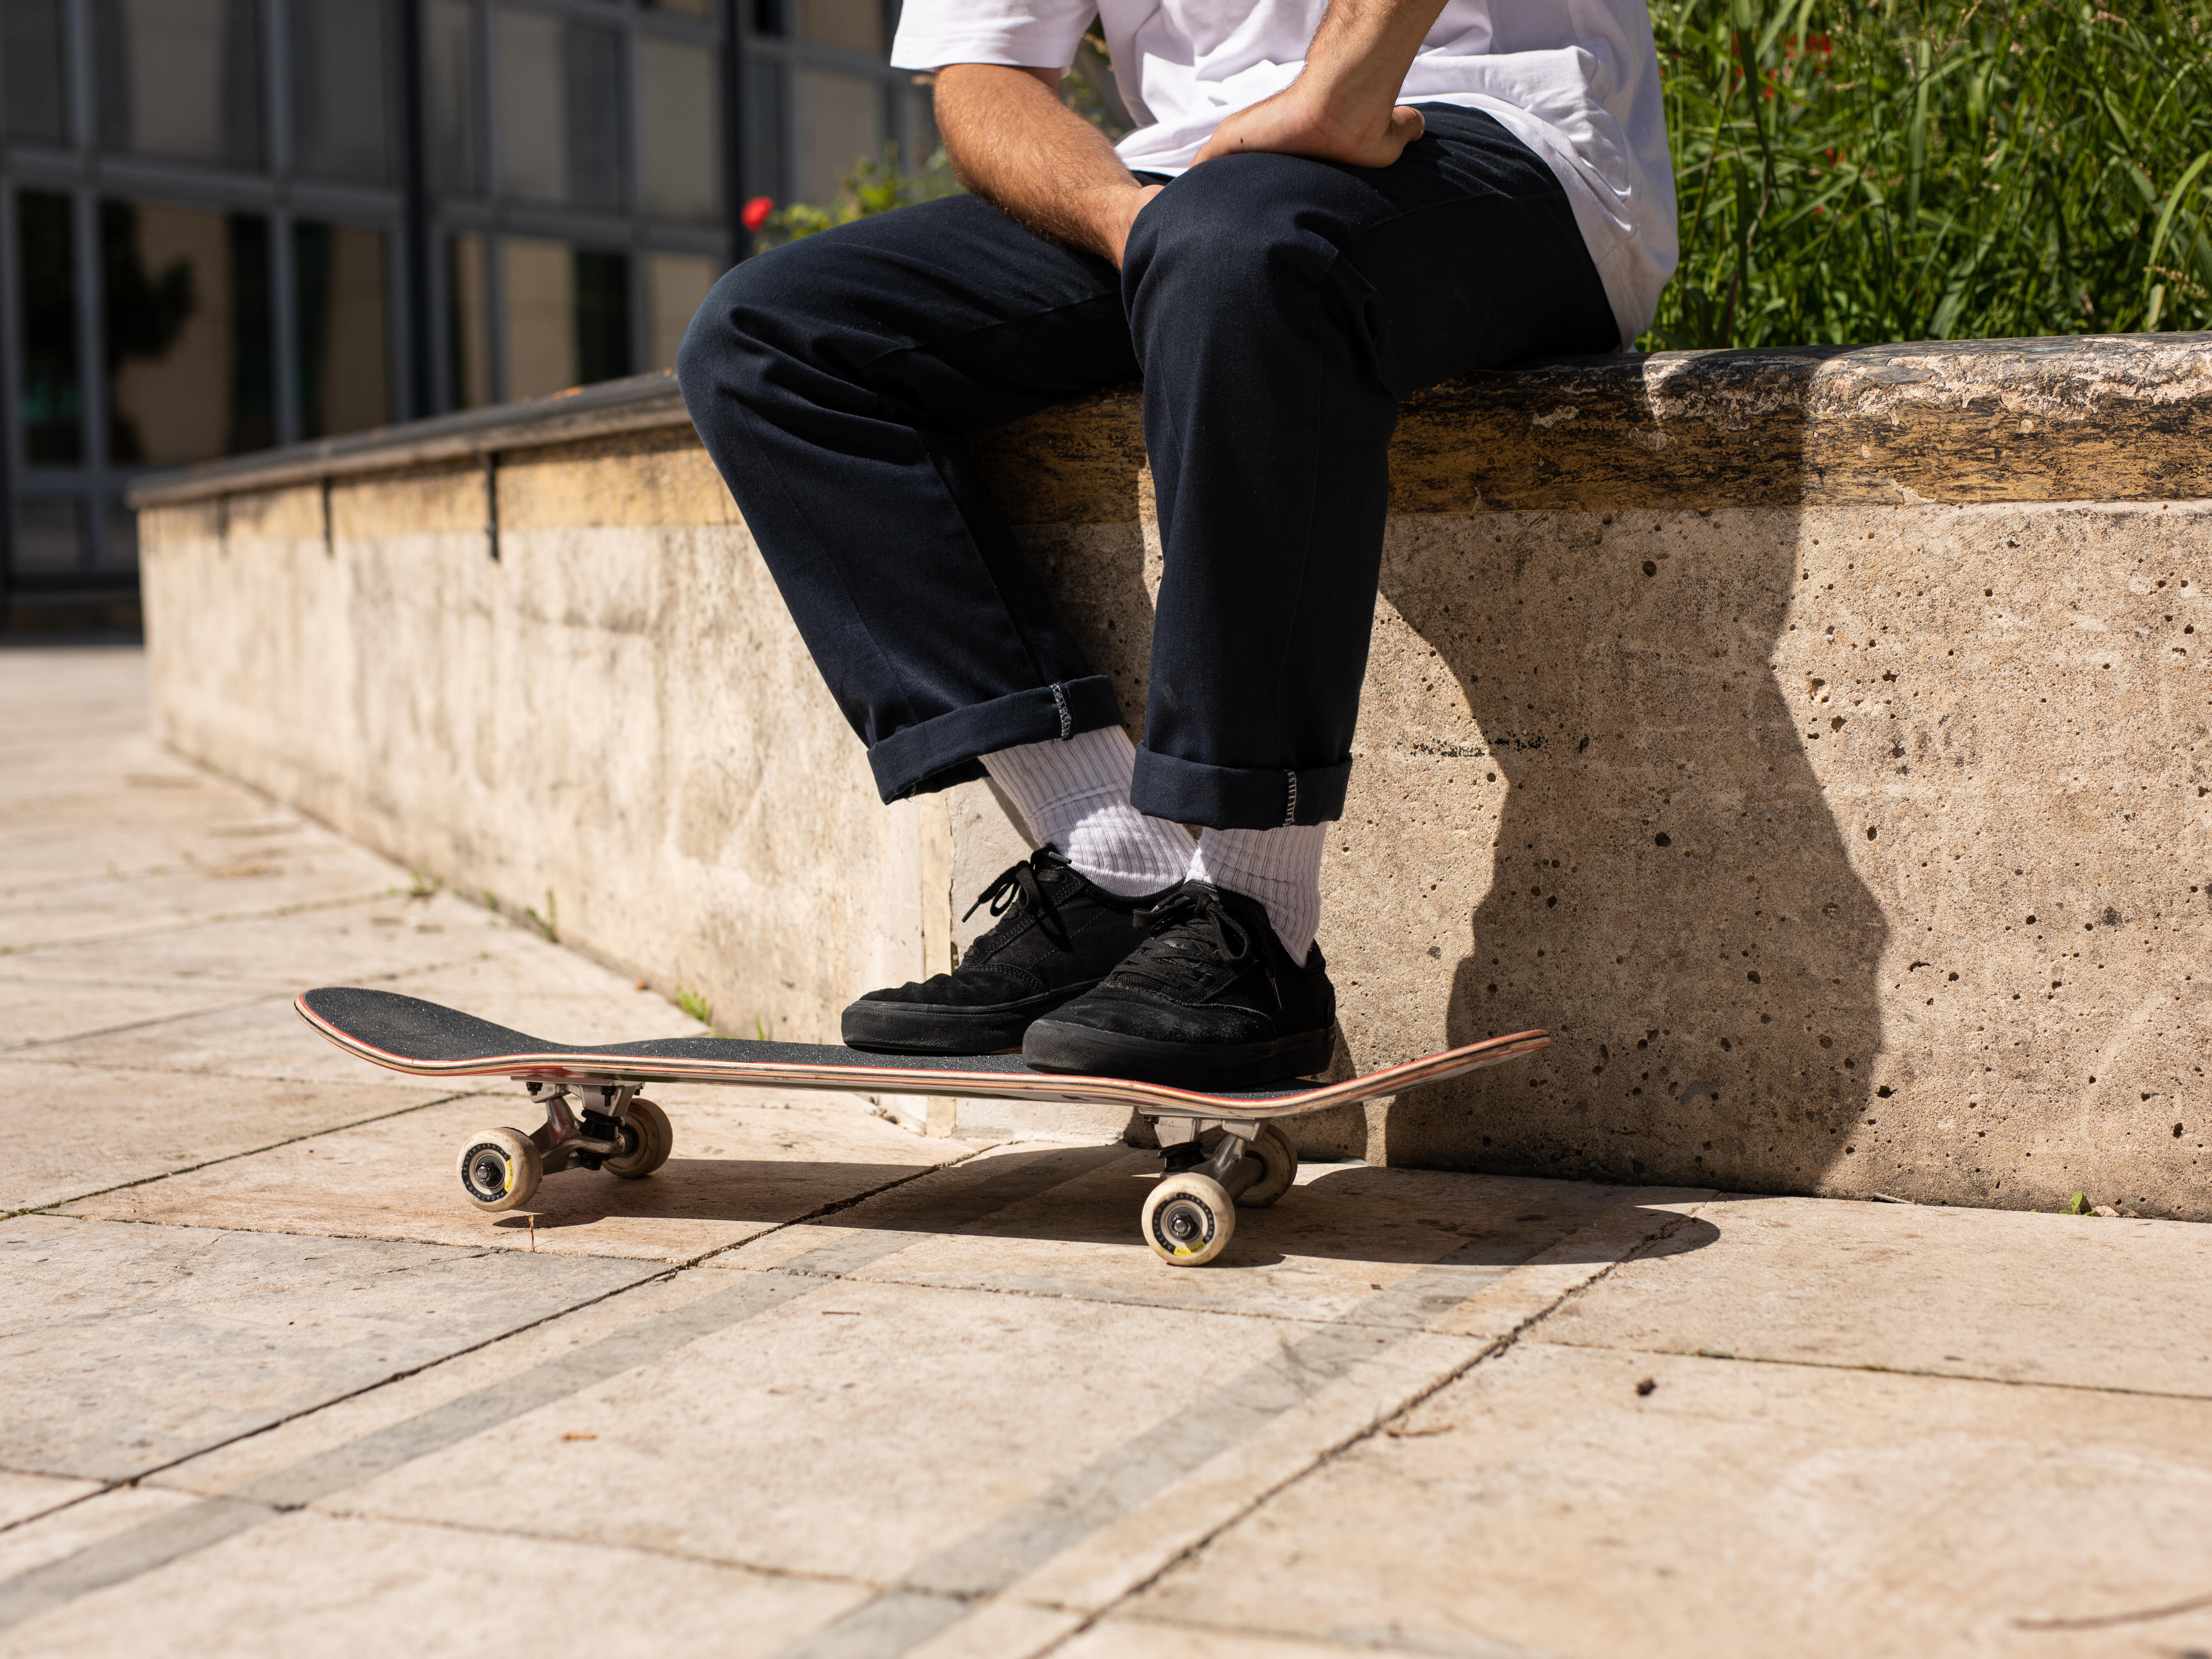 Roues Skate - Tous nos modèles de Roue de Skateboard